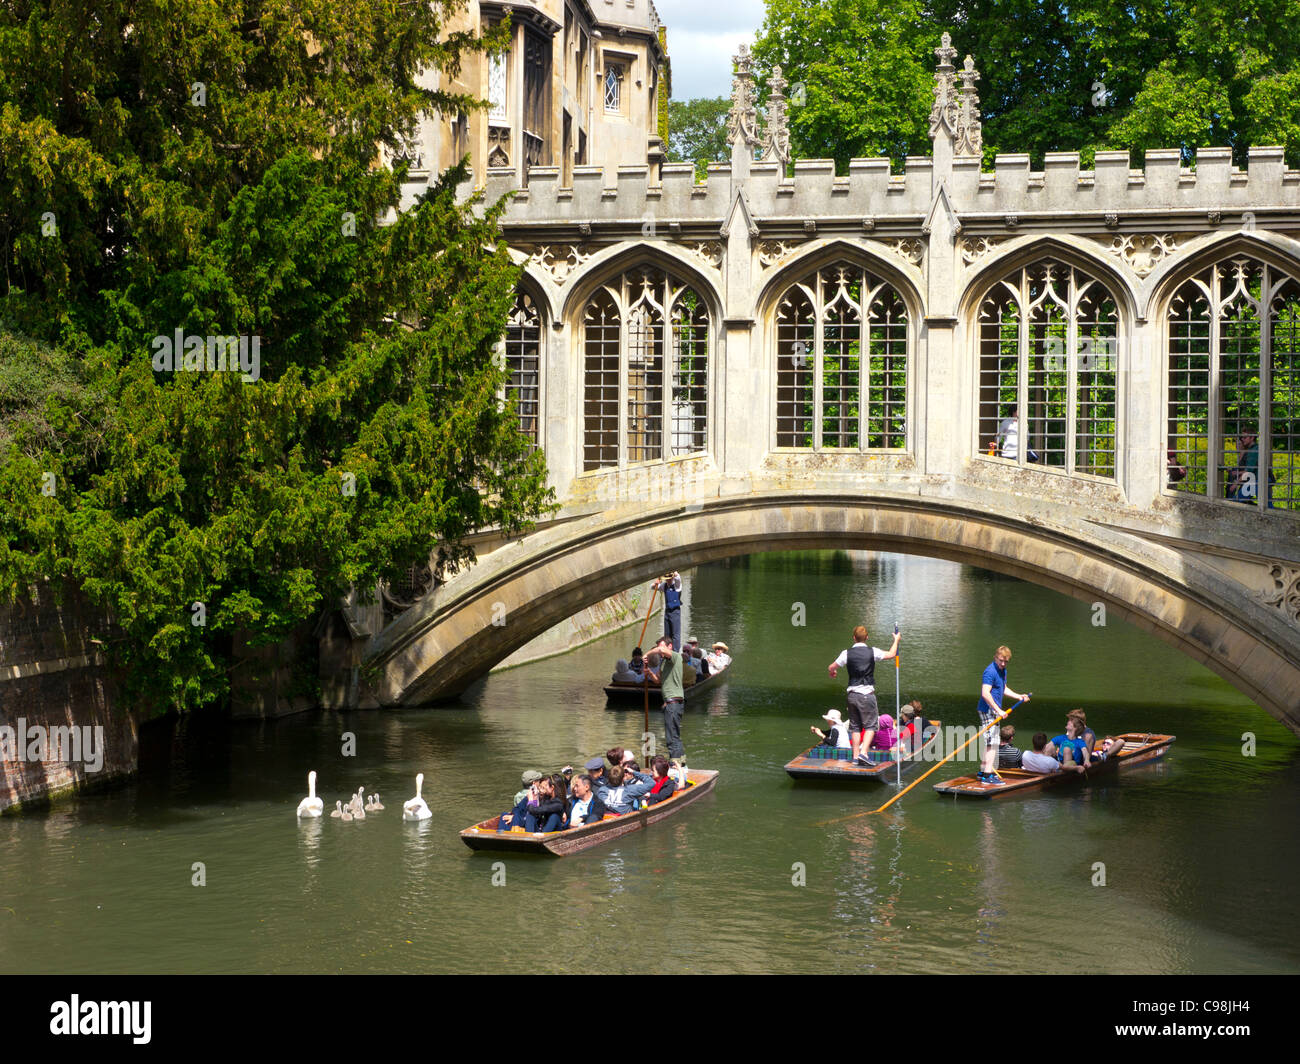 Stechkahn fahren unter der Seufzerbrücke, St. Johns College, Cambridge. Stockfoto